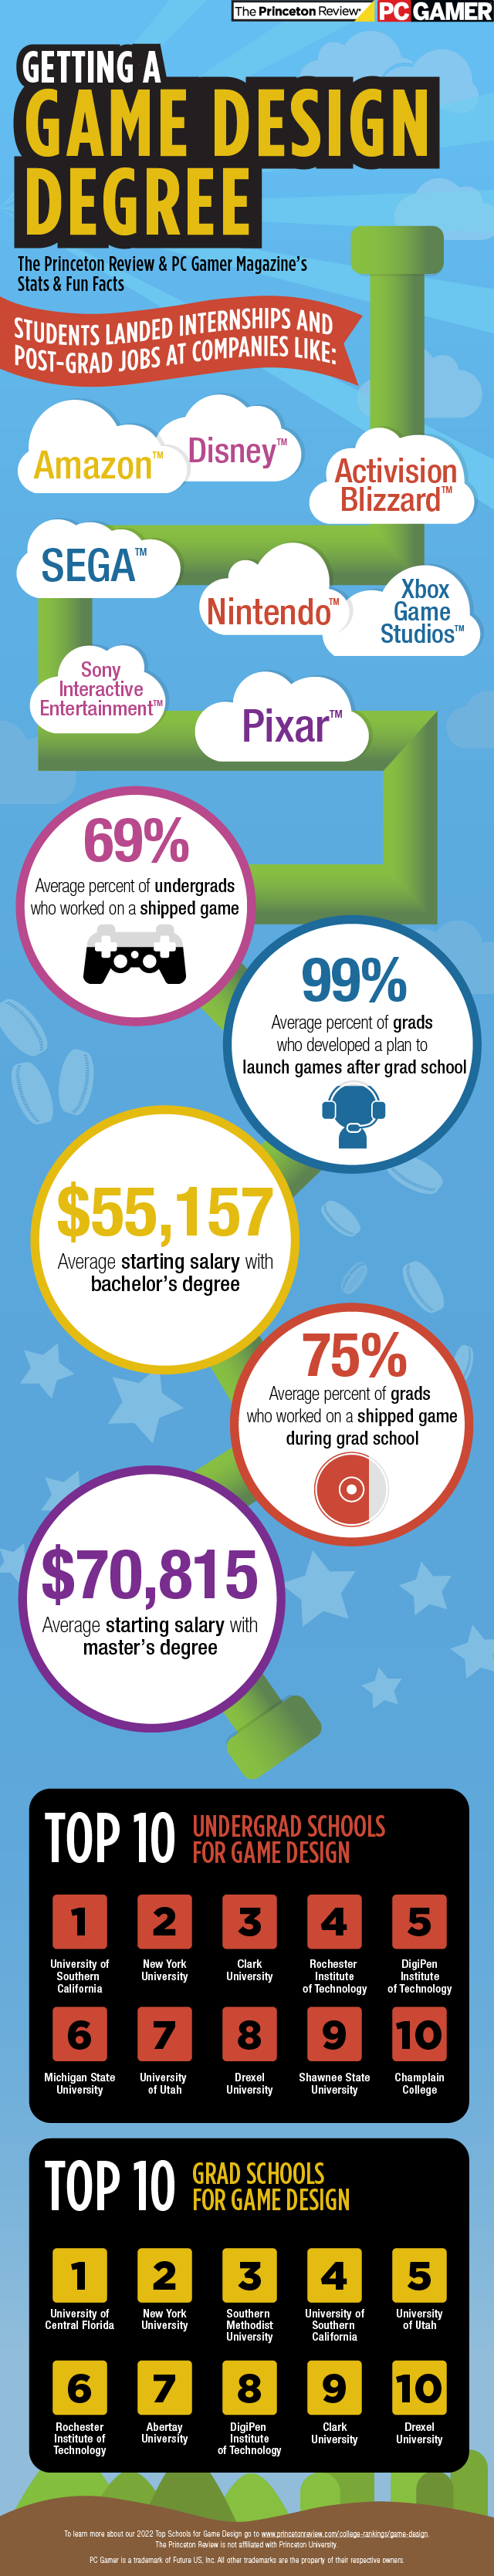 Game Design degree infographic